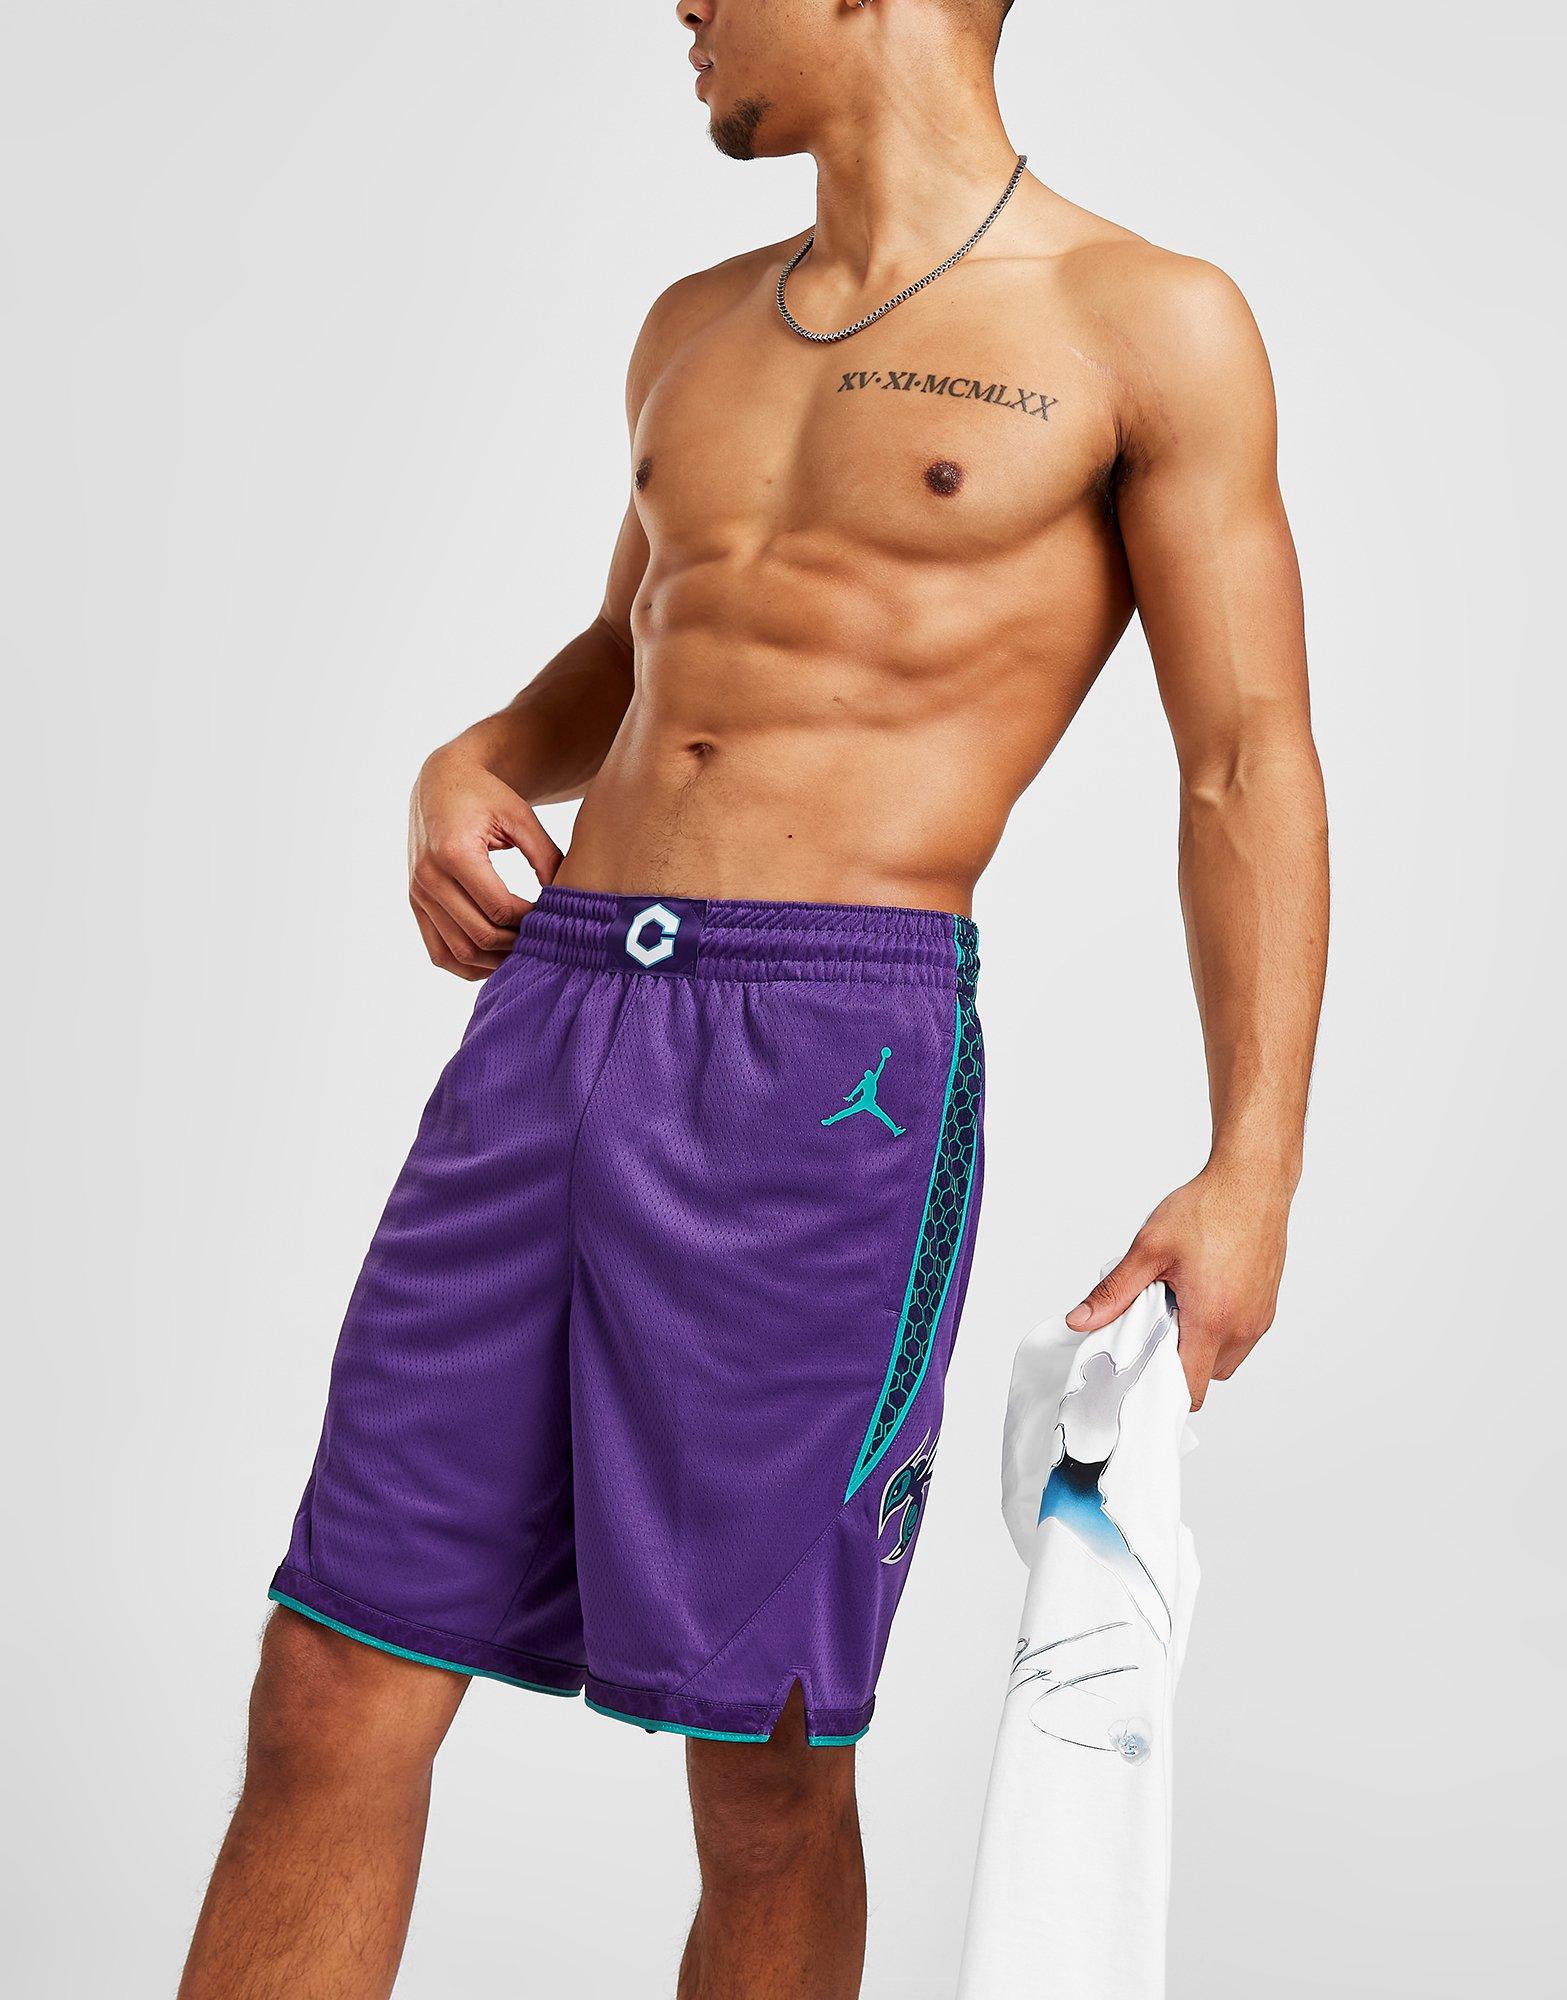 Purple Jordan NBA Charlotte Hornets Swingman Shorts